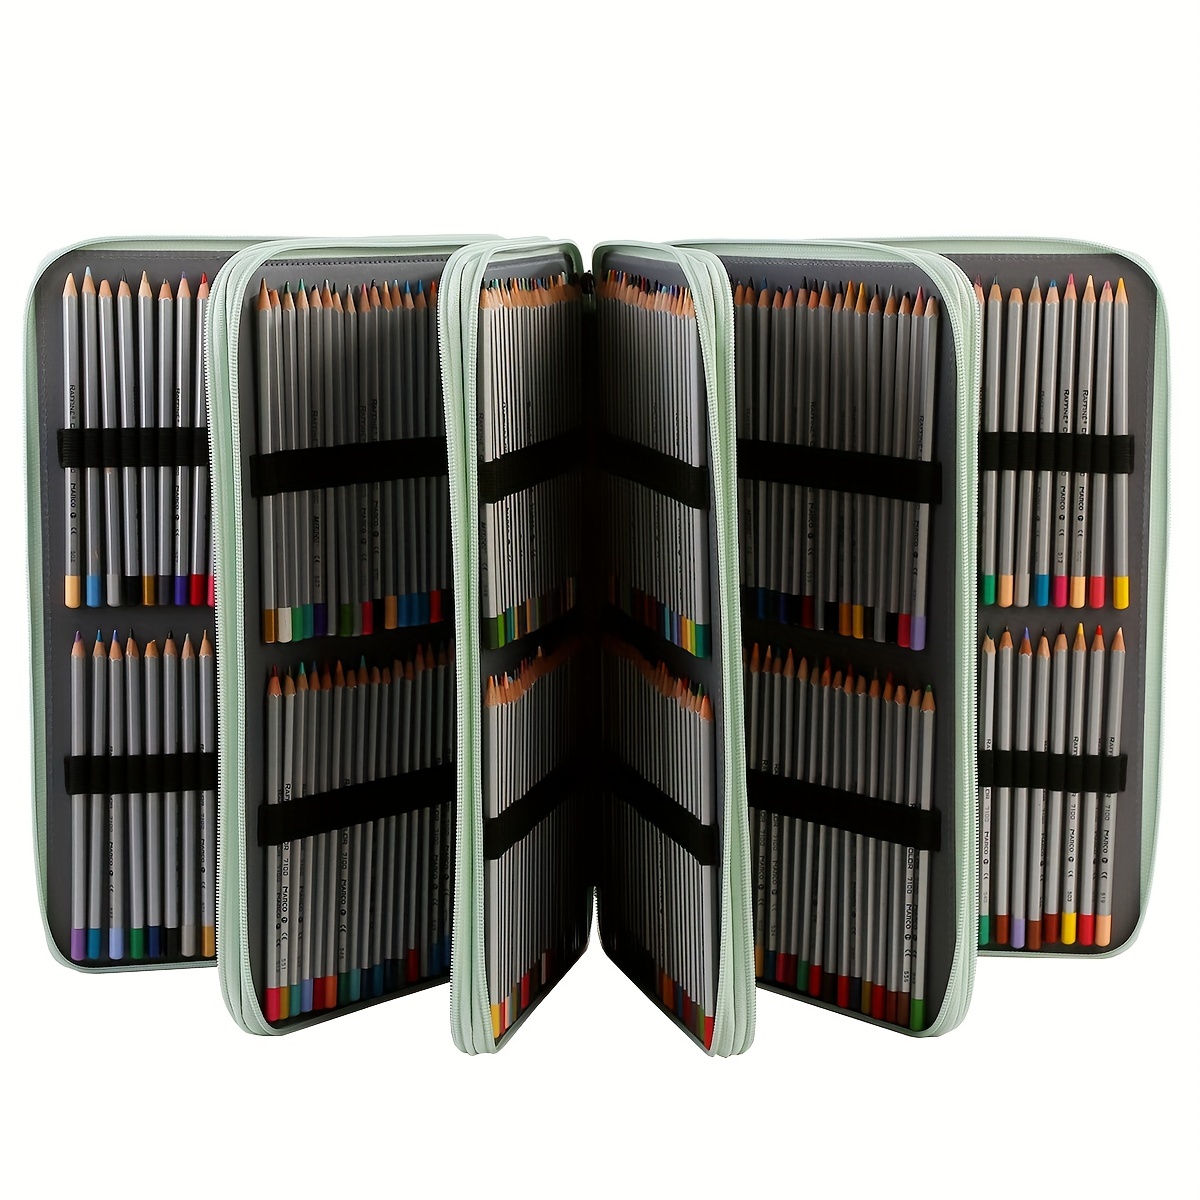  BTSKY 200 Slots Colored Pencil Organizer - Deluxe PU